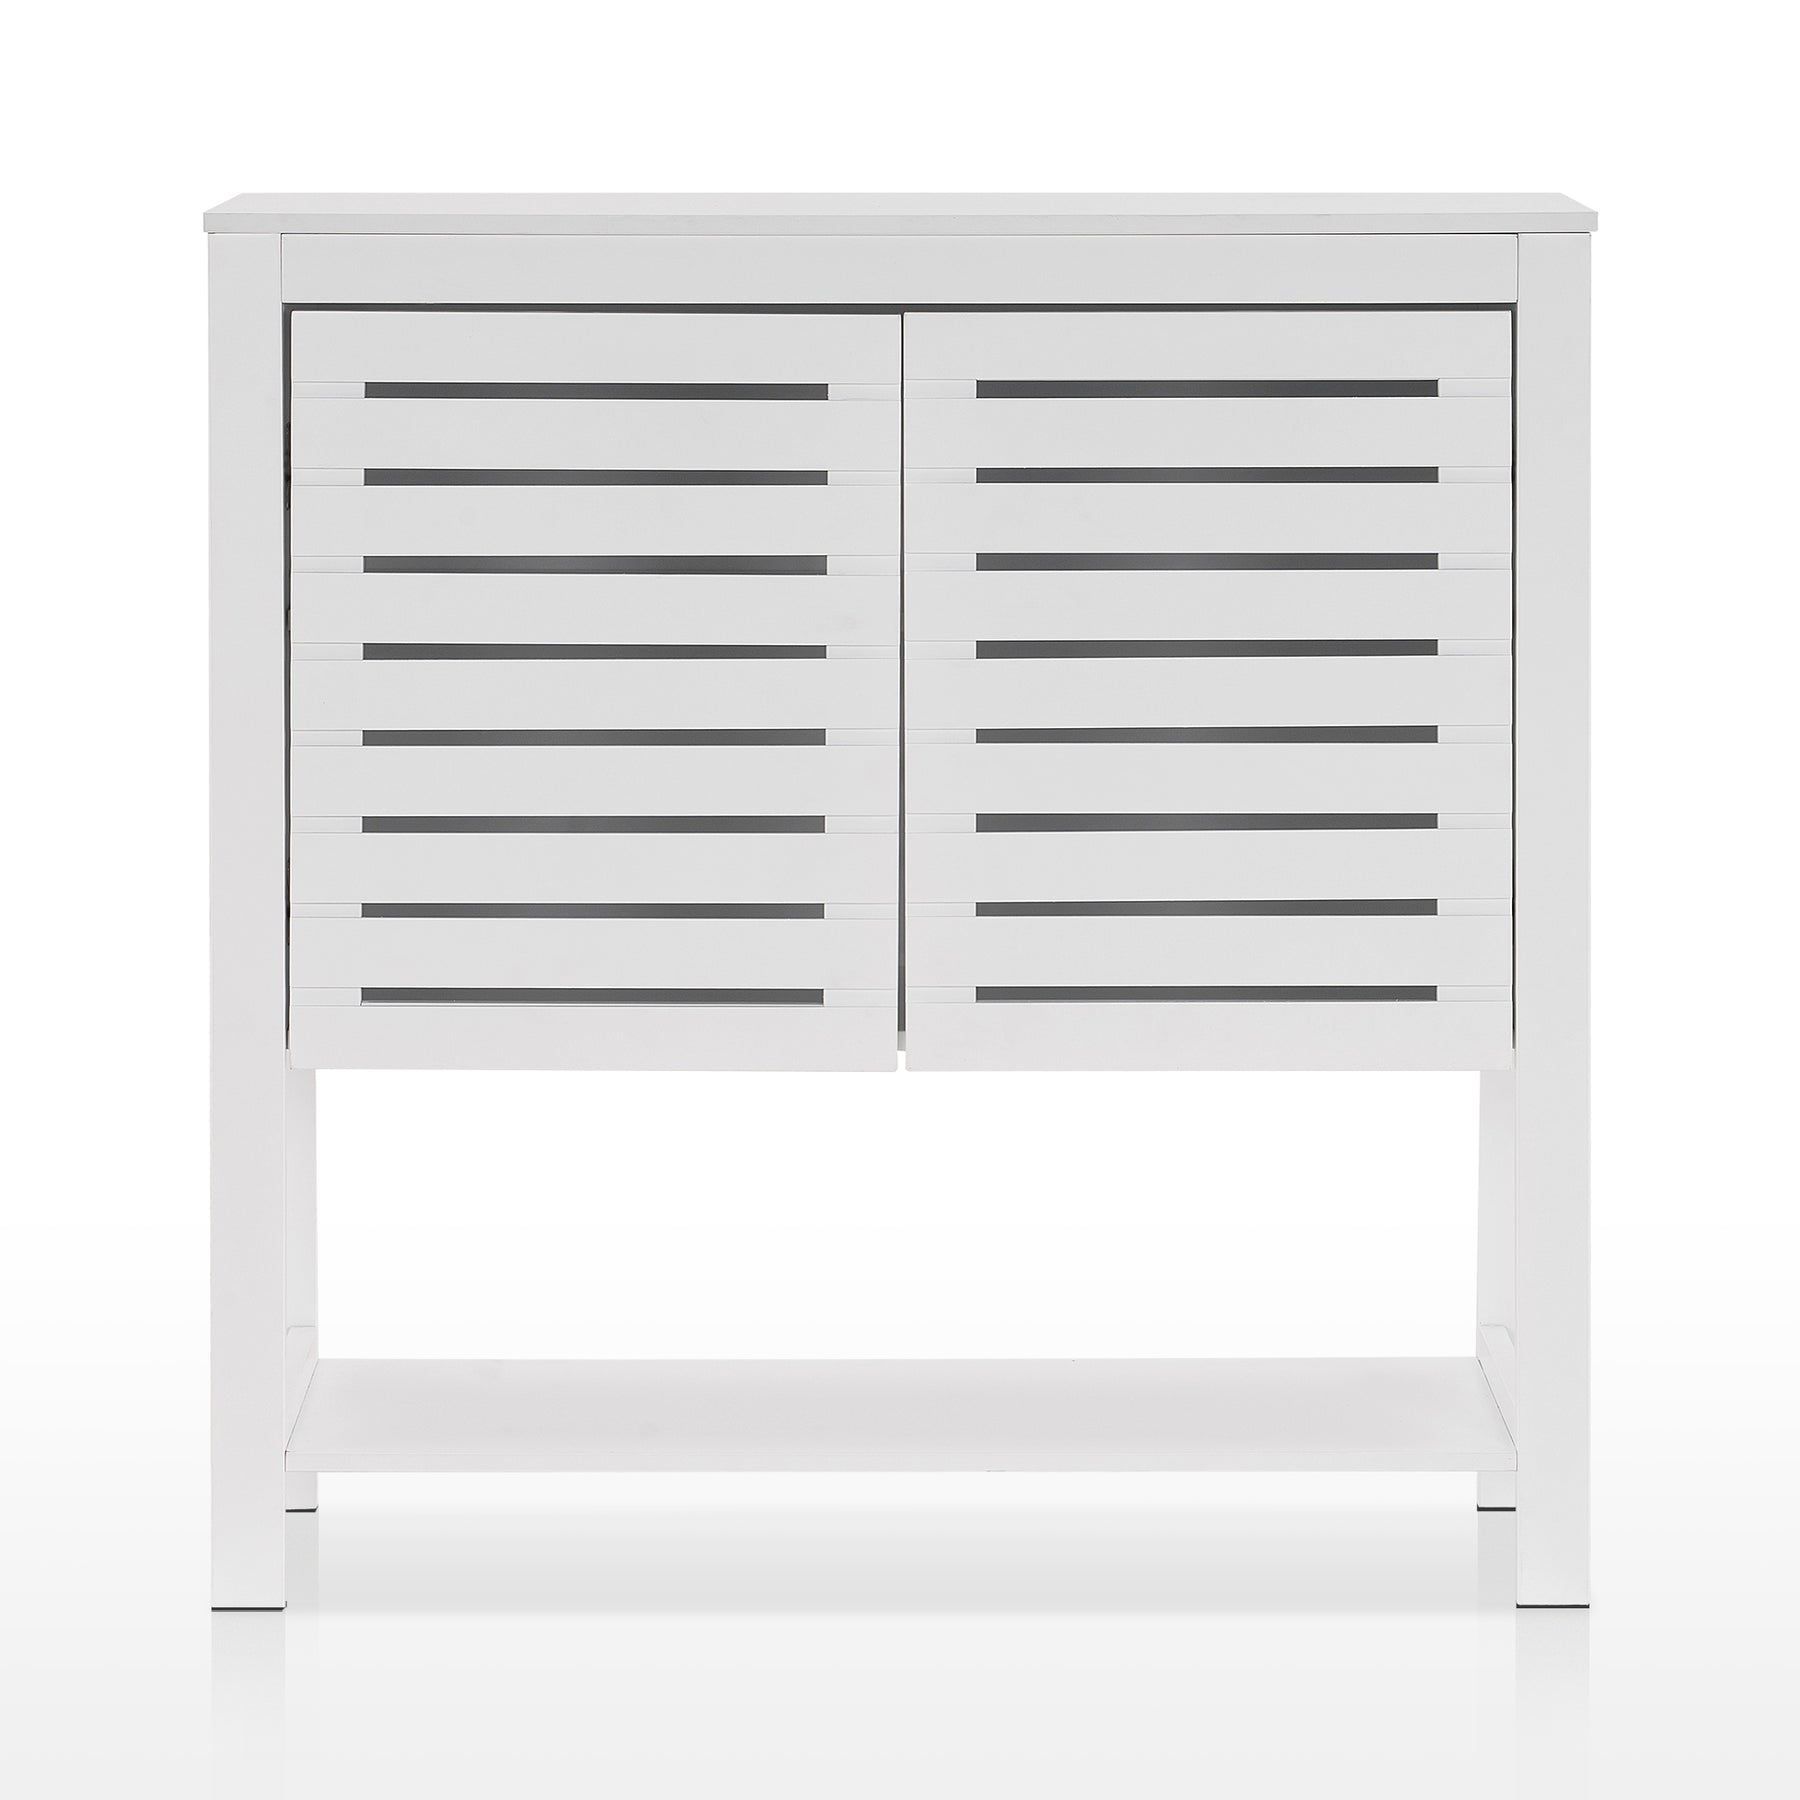 HOMCOM 67 Free Standing Bathroom Storage Cabinet - White